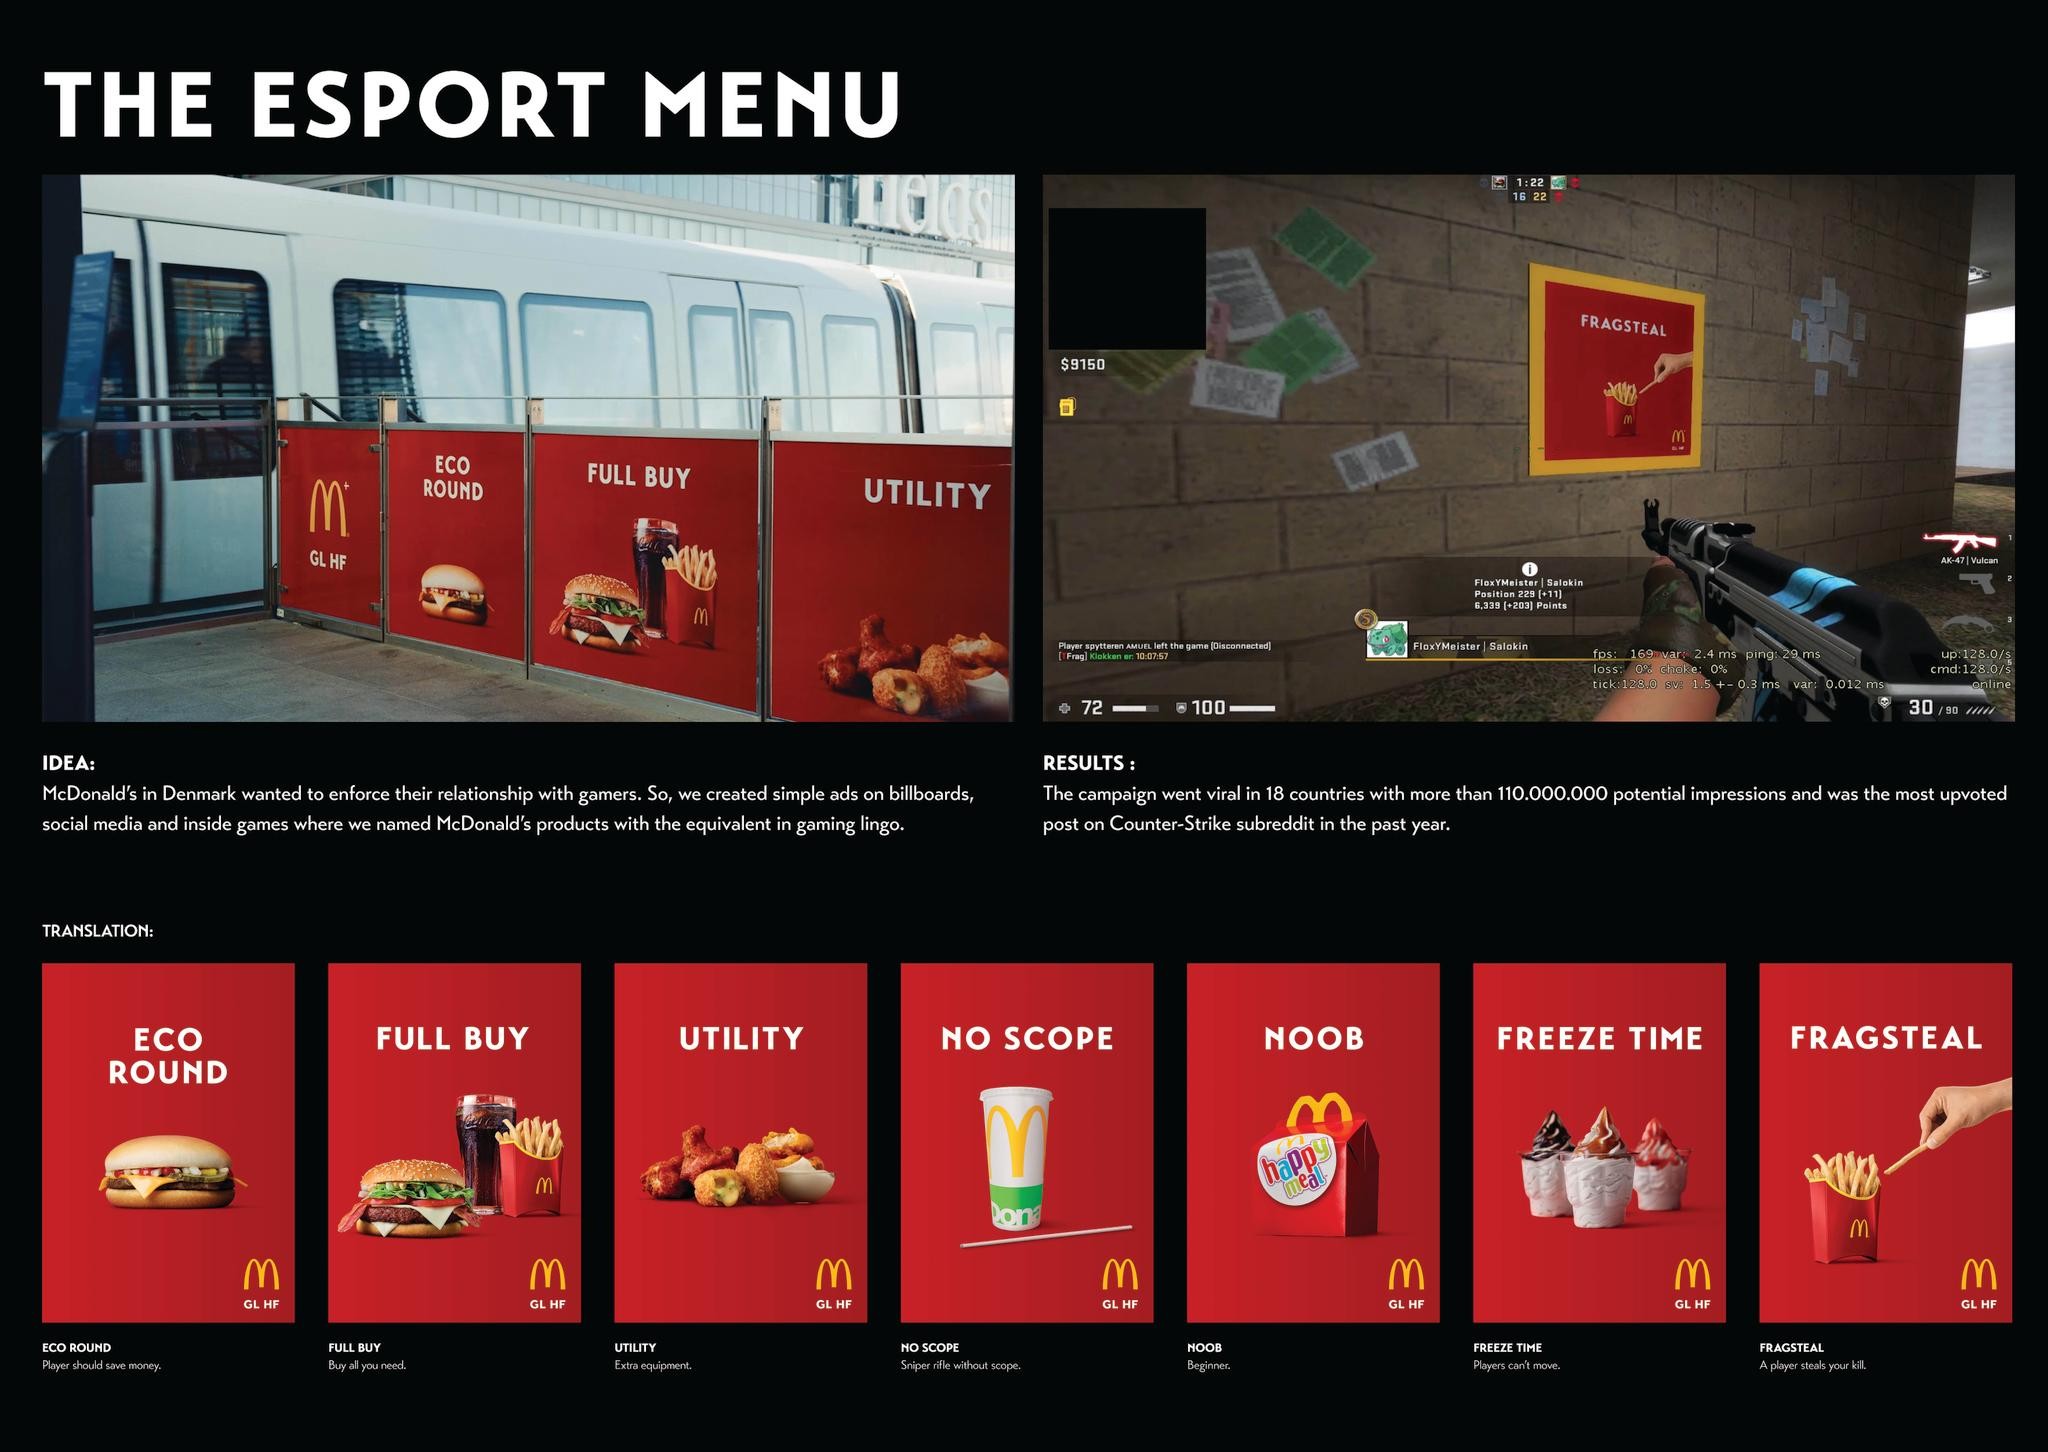 The esport menu